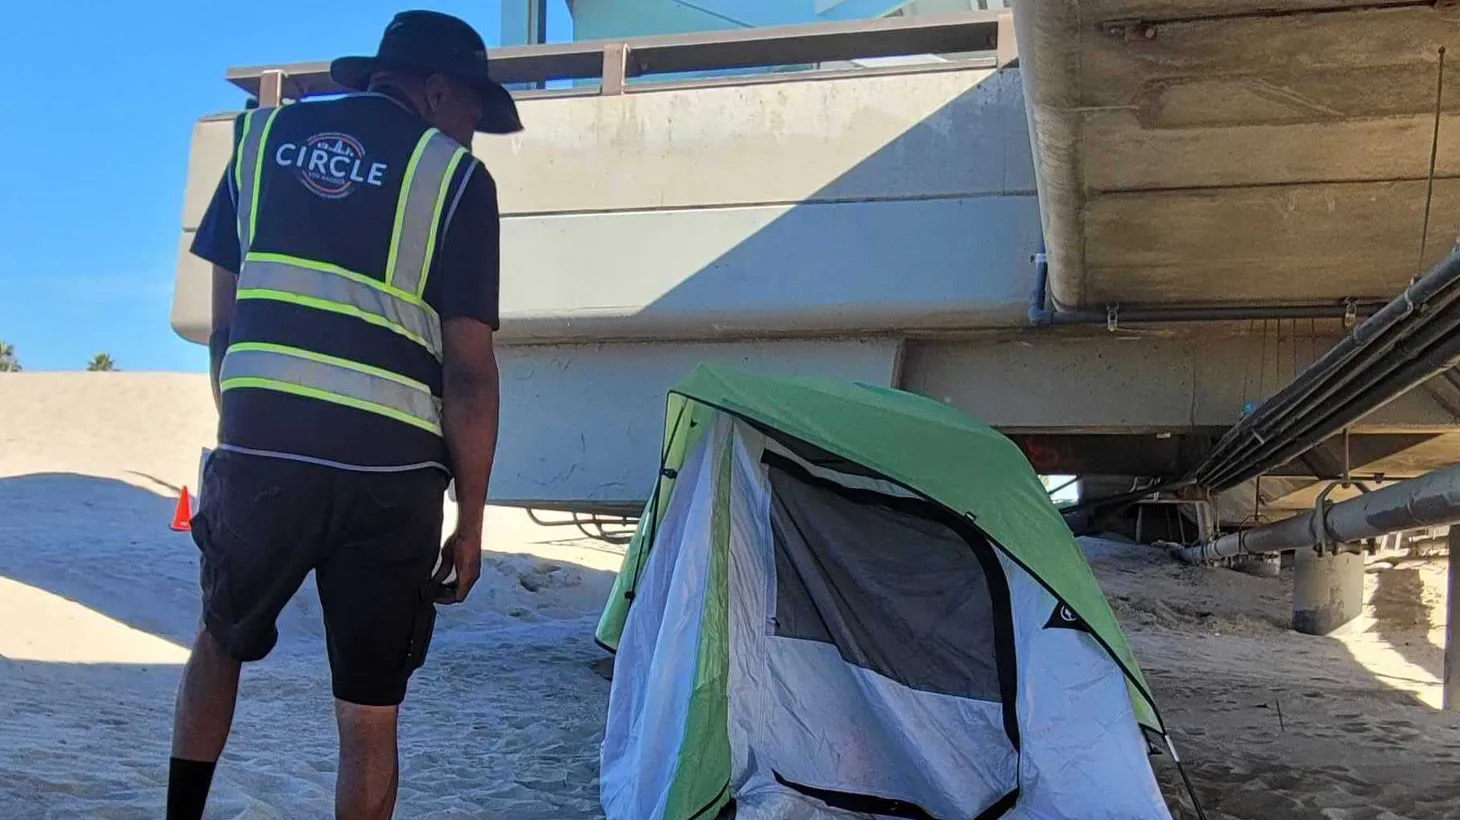 An LA CIRCLE team outreach worker approaches a tent on an LA beach.